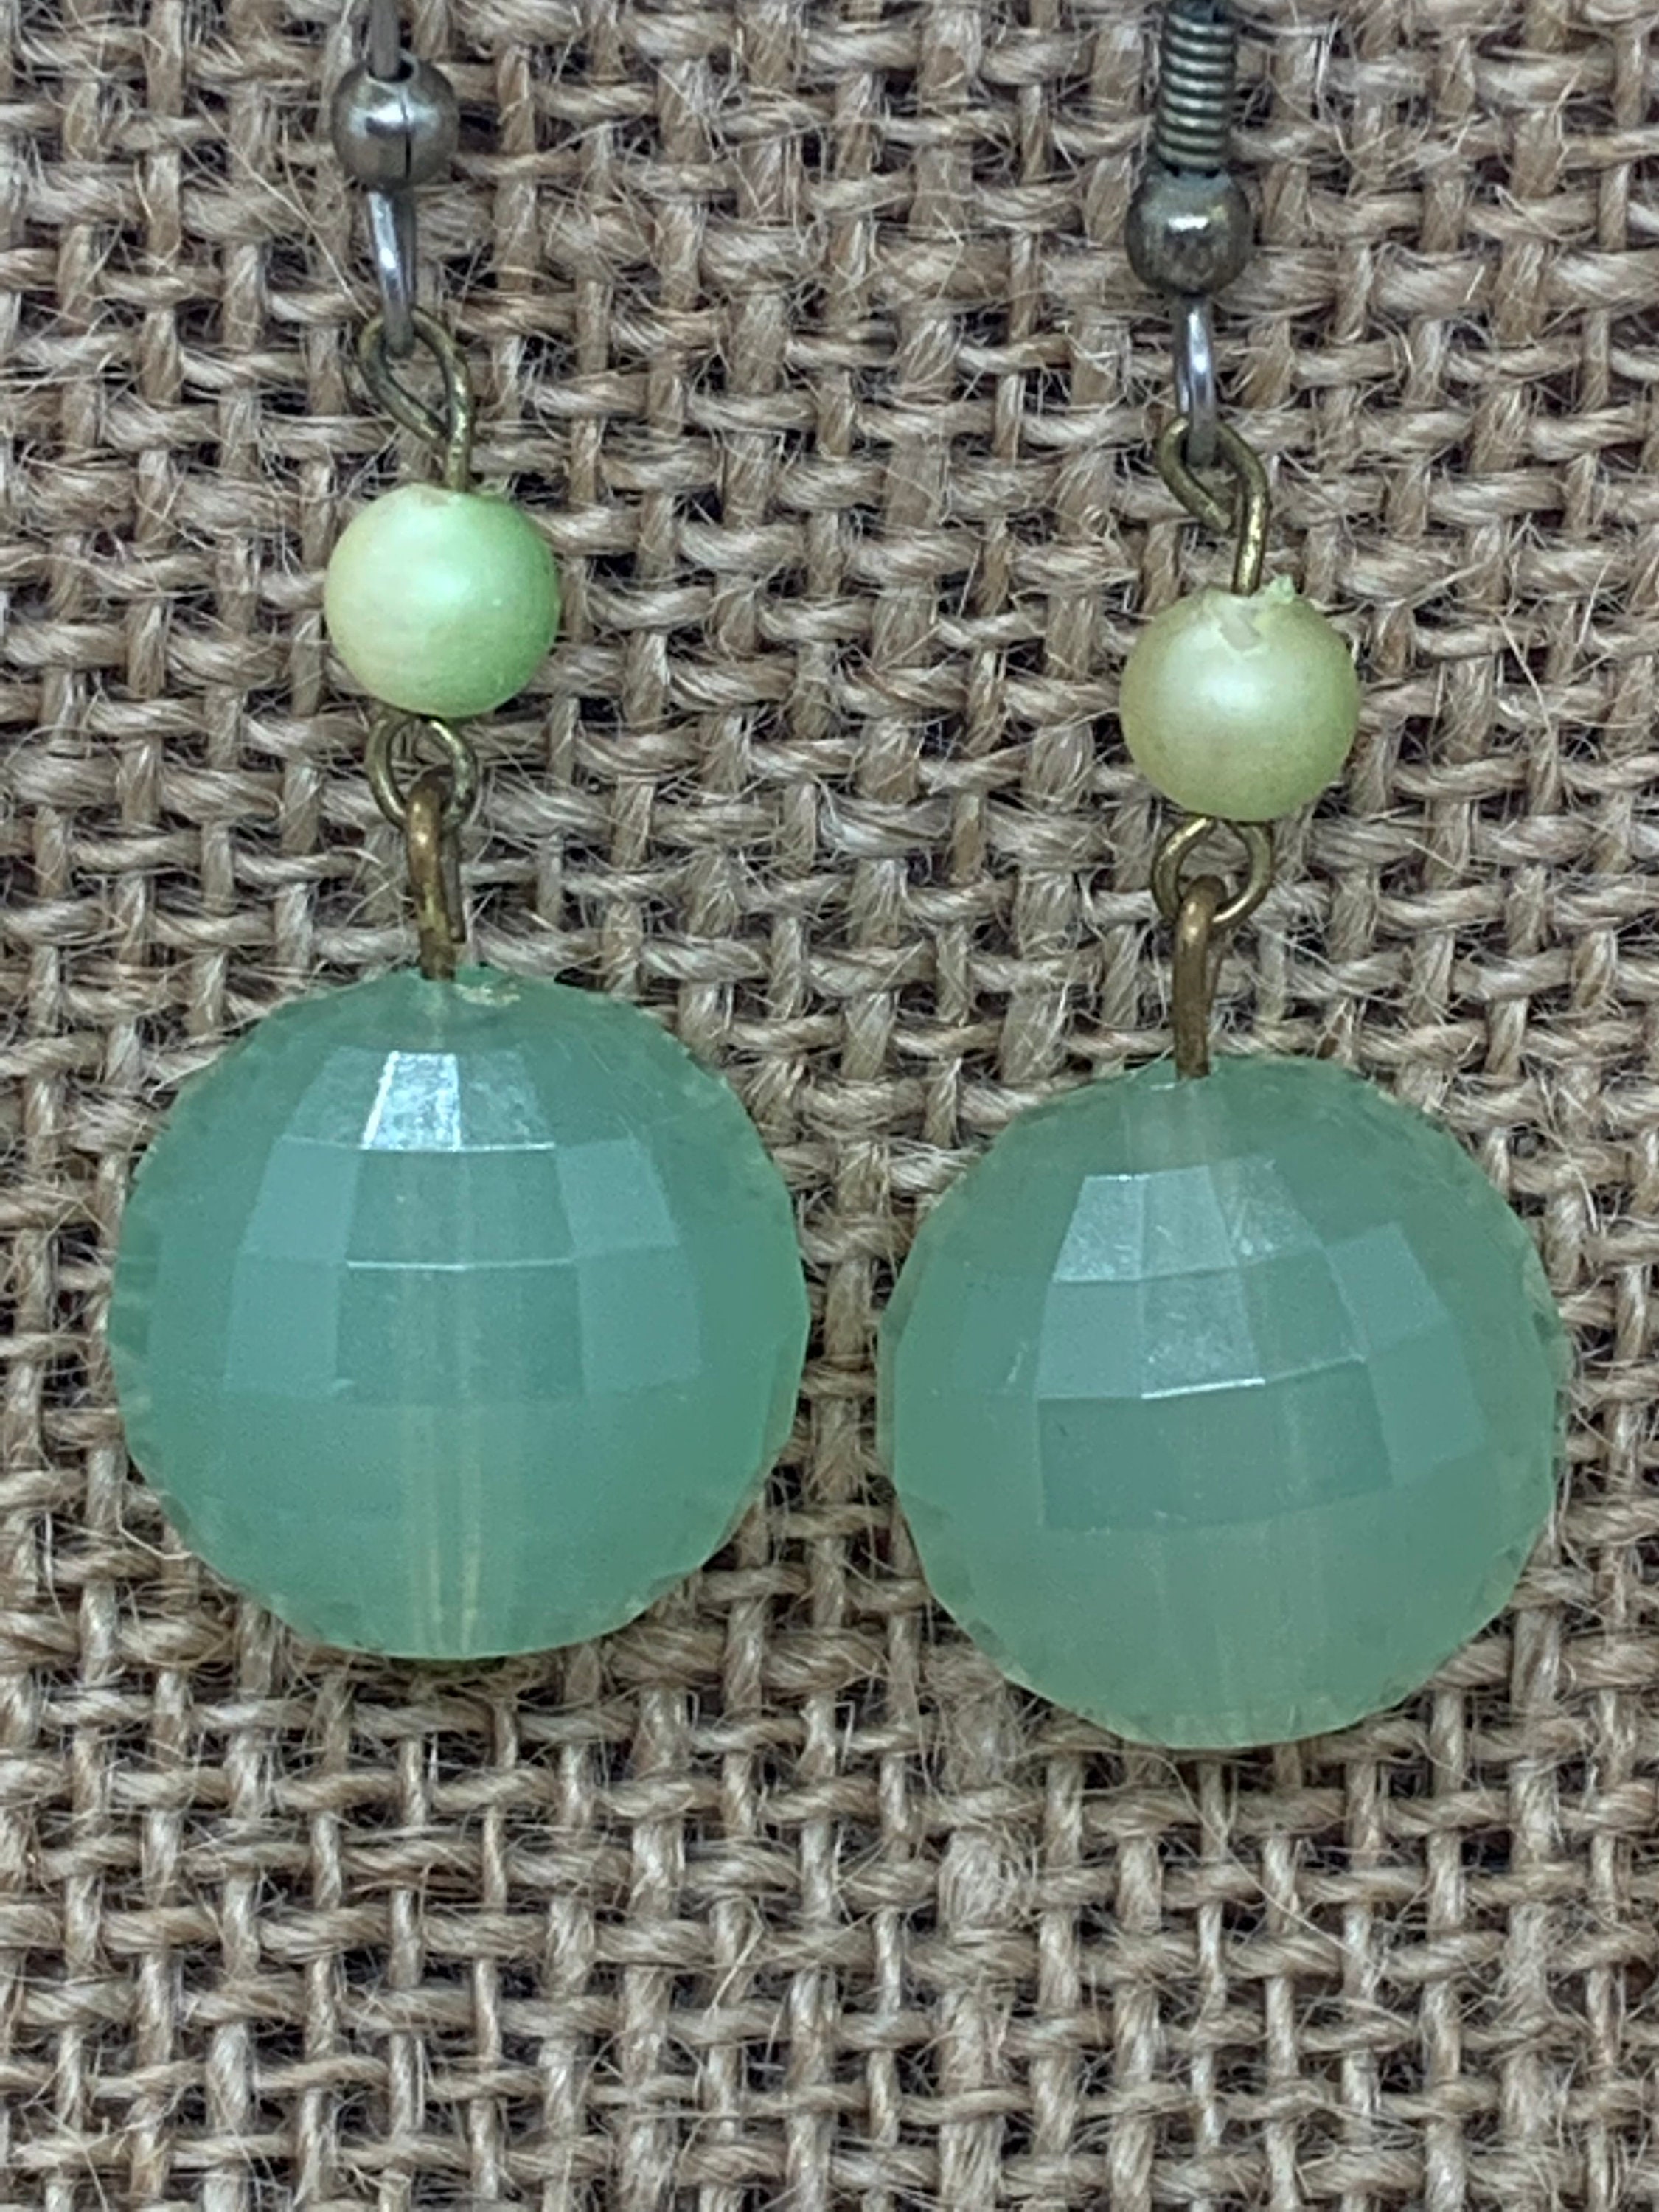 Green Sphere Earrings